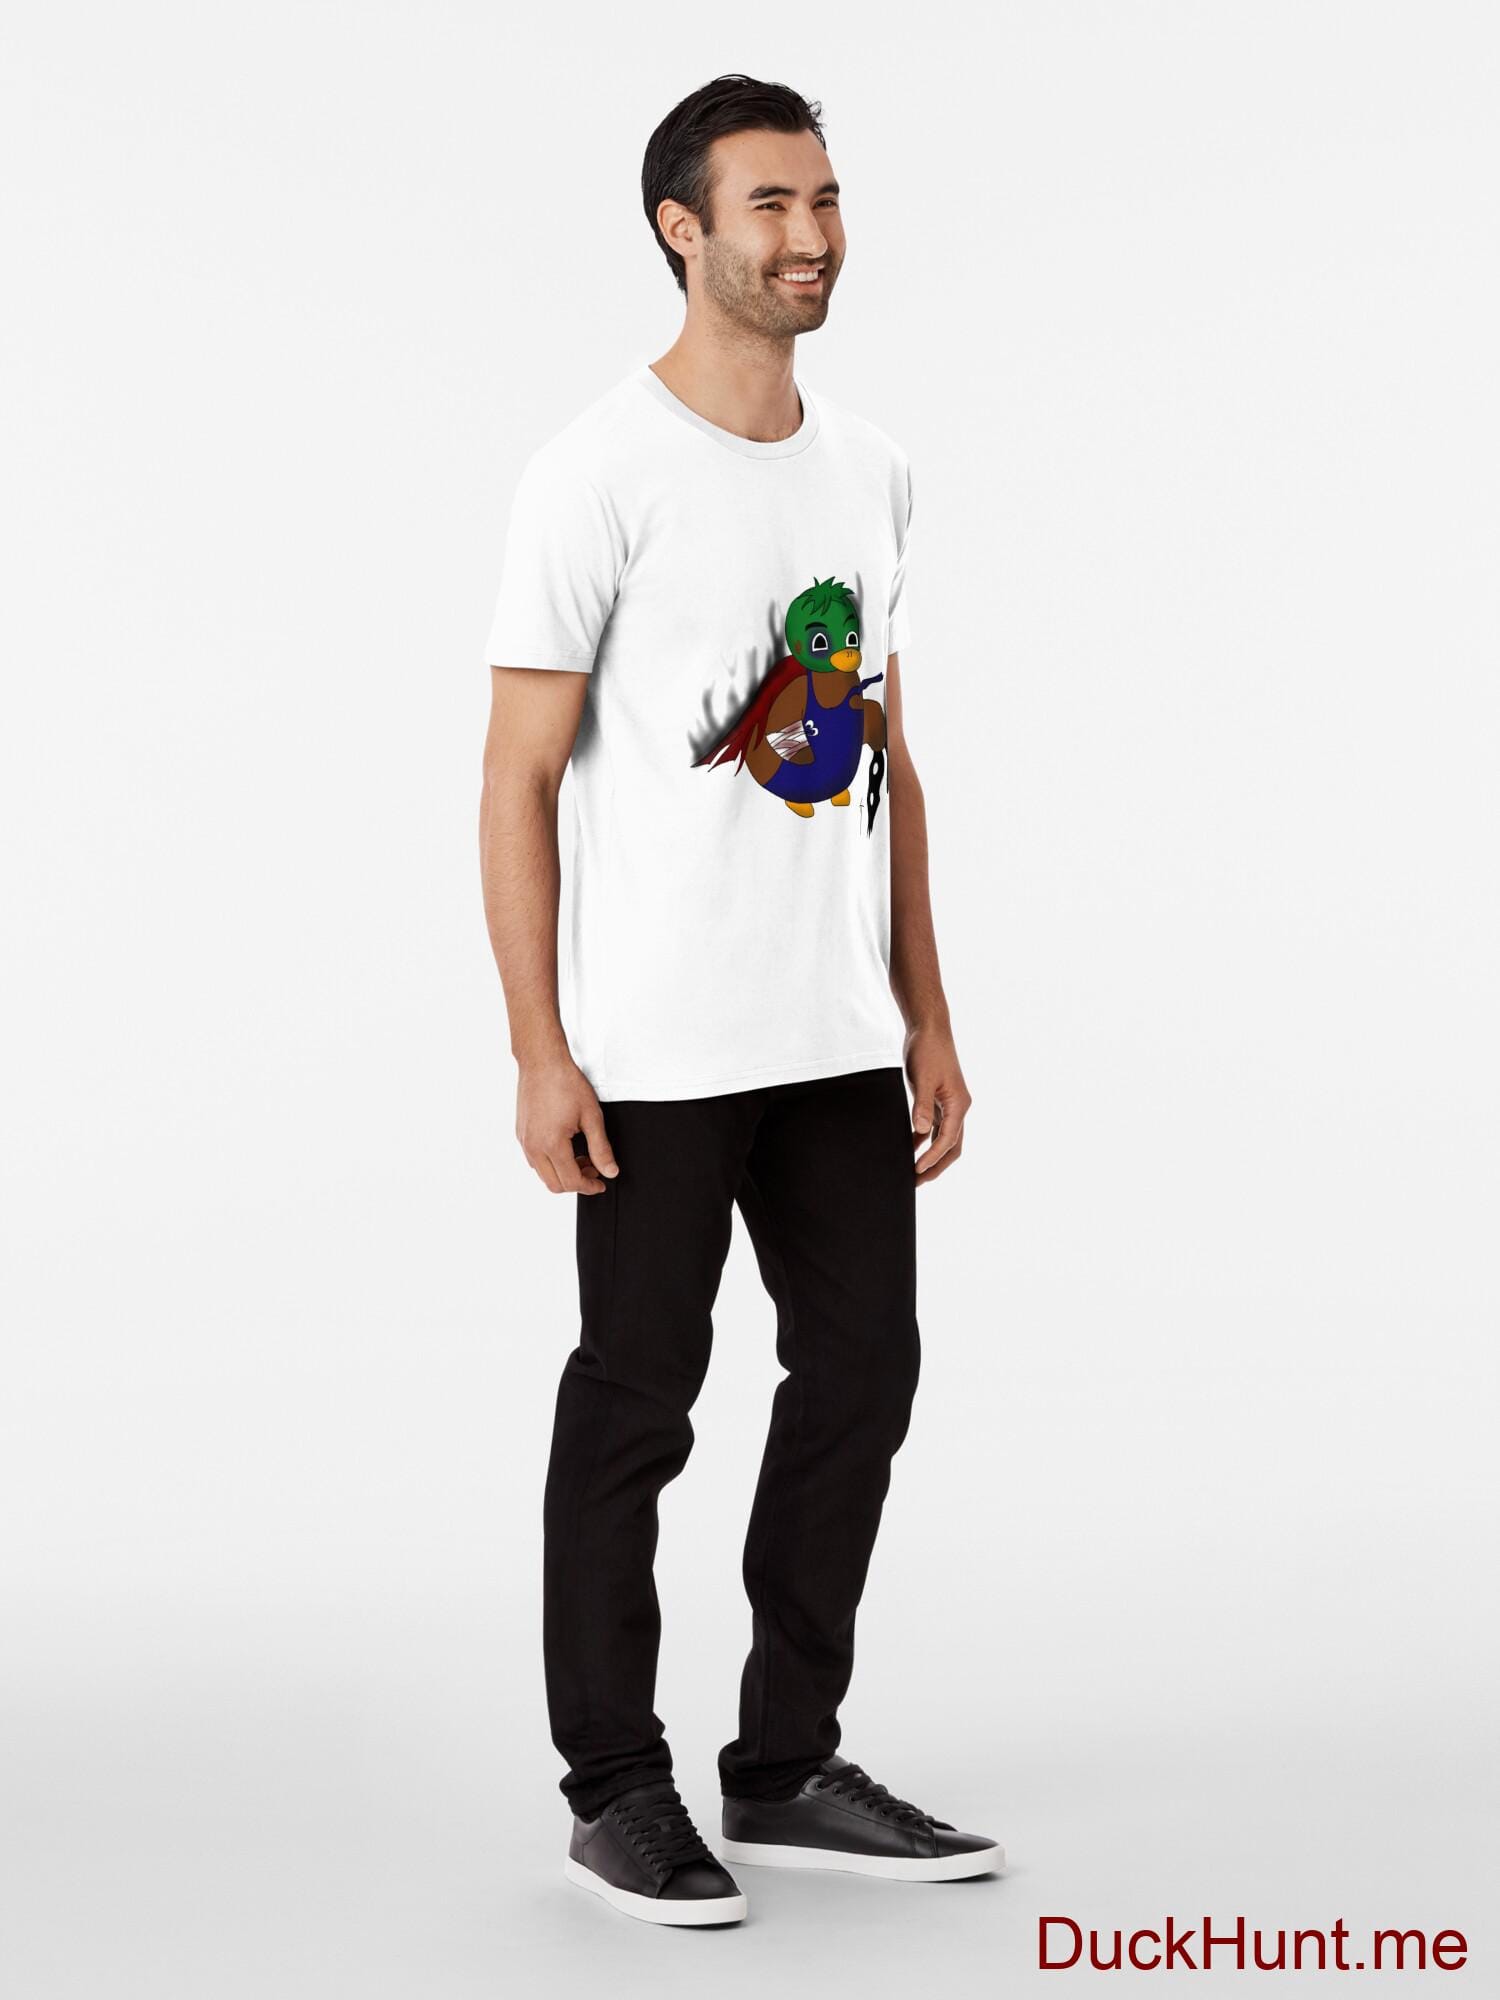 Dead Boss Duck (smoky) White Premium T-Shirt (Front printed) alternative image 2